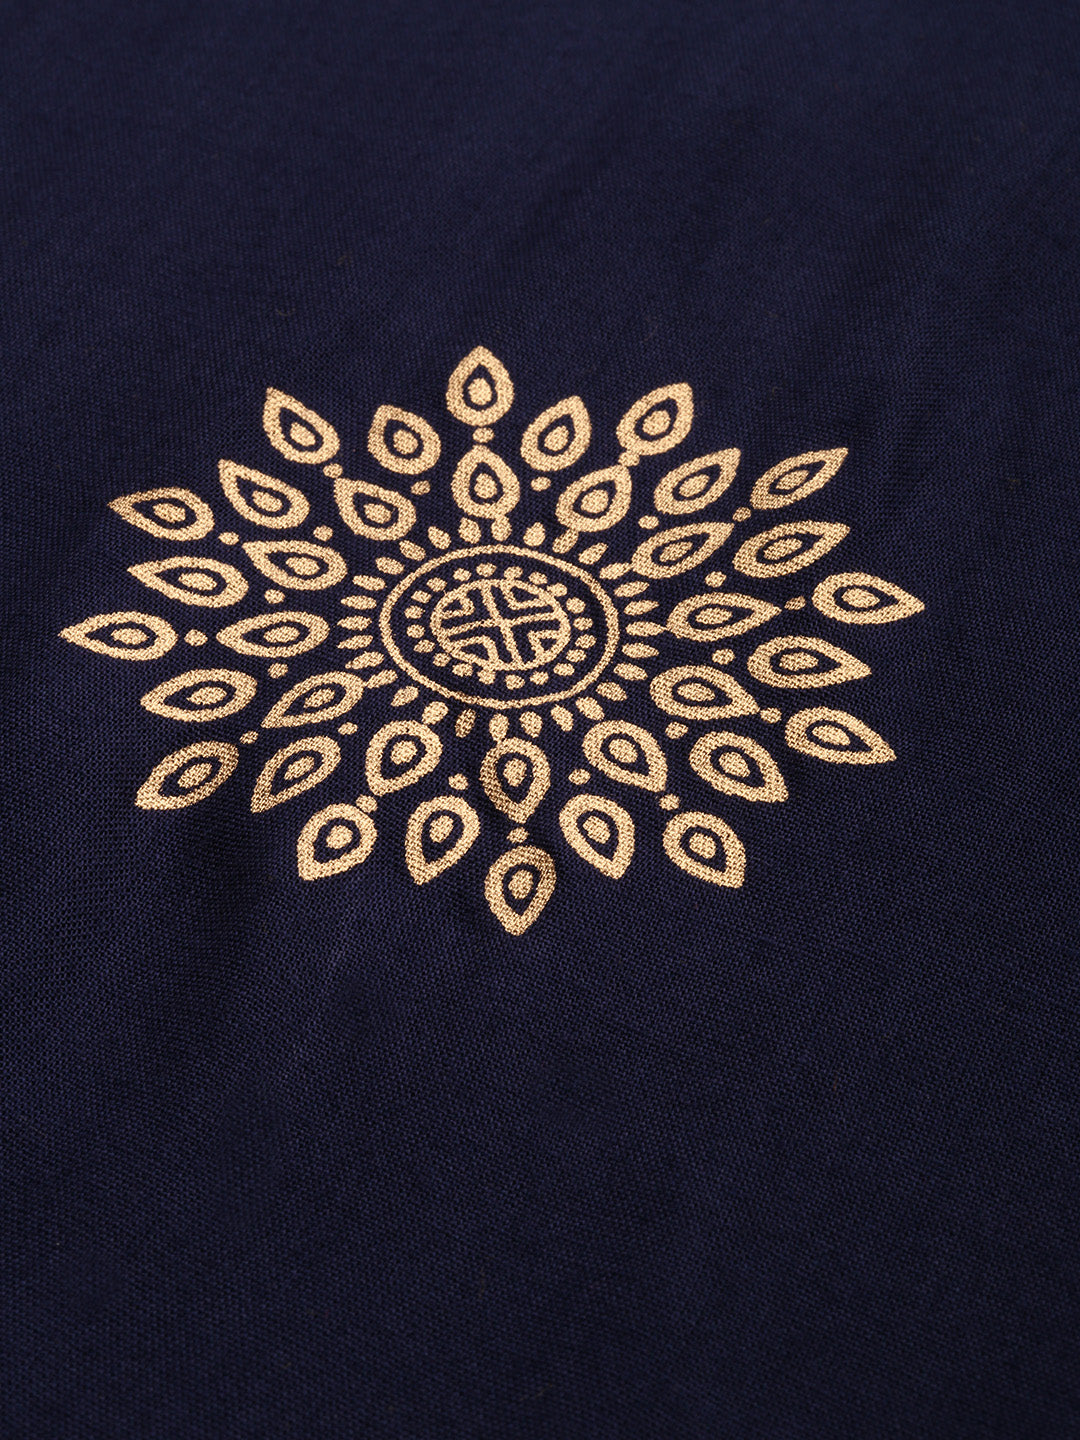 Navy Blue & Gold-Toned Floral Printed Straight Kurta